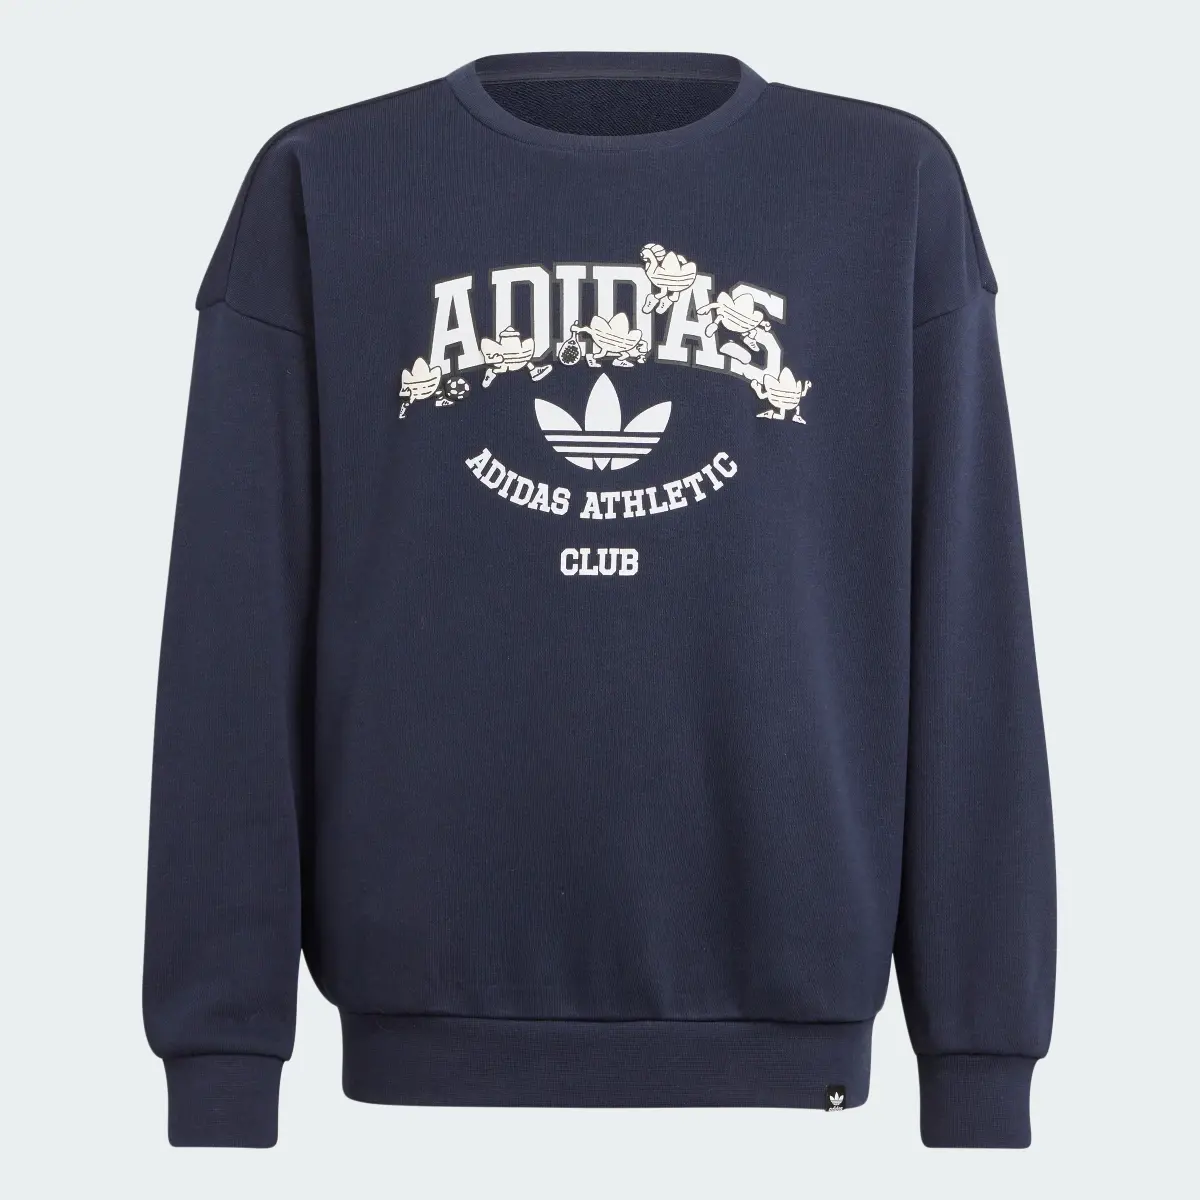 Adidas Sweatshirt – Criança. 1